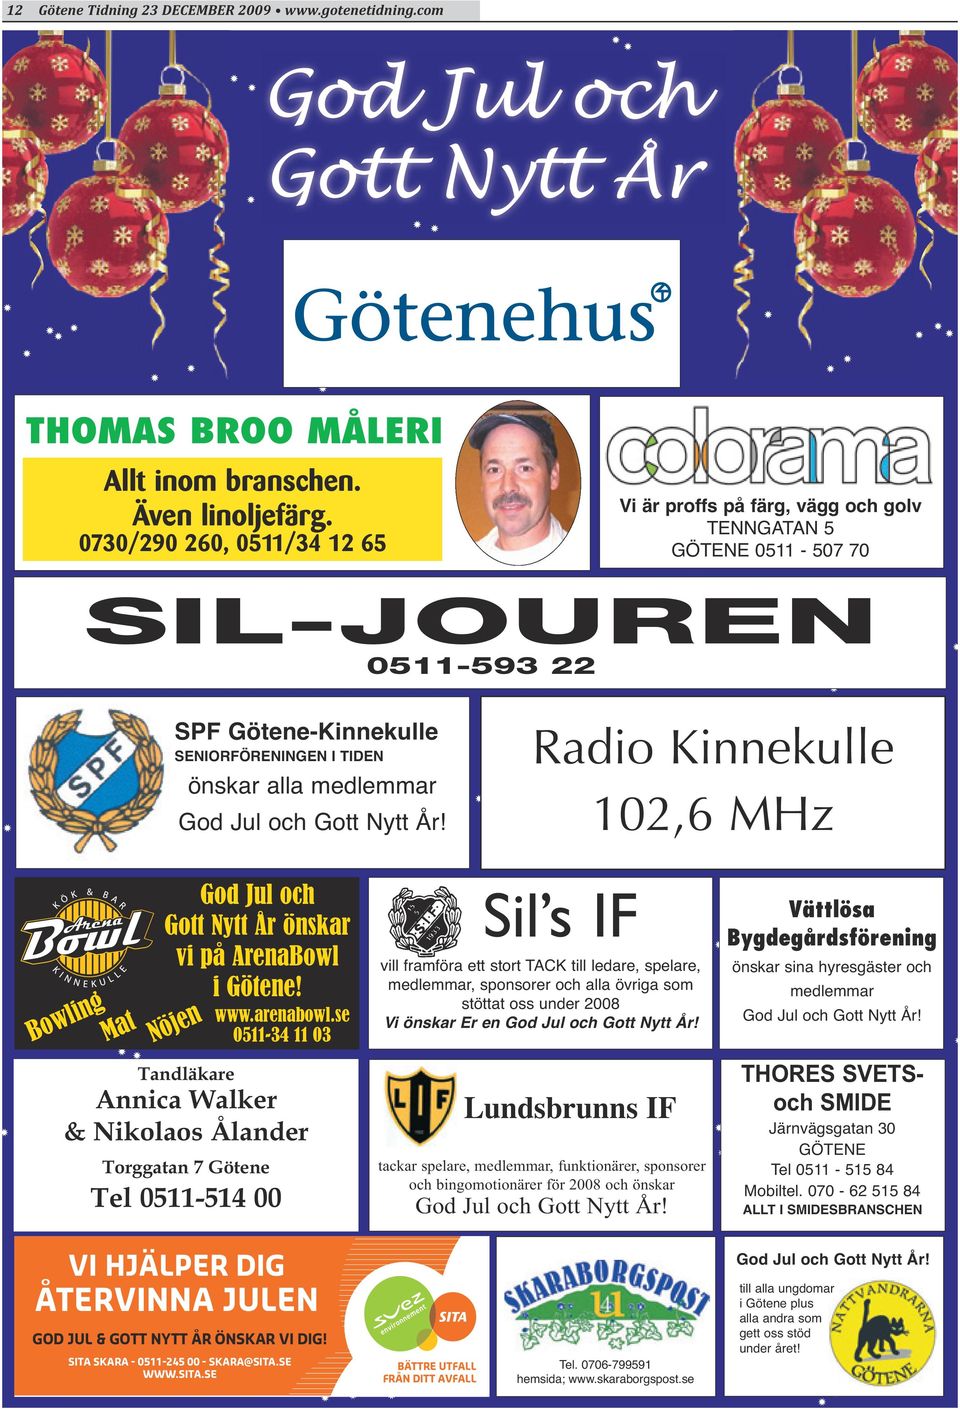 Radio Kinnekulle 102,6 MHz Bowling Mat Nöjen önskar vi på ArenaBowl i Götene! www.arenabowl.